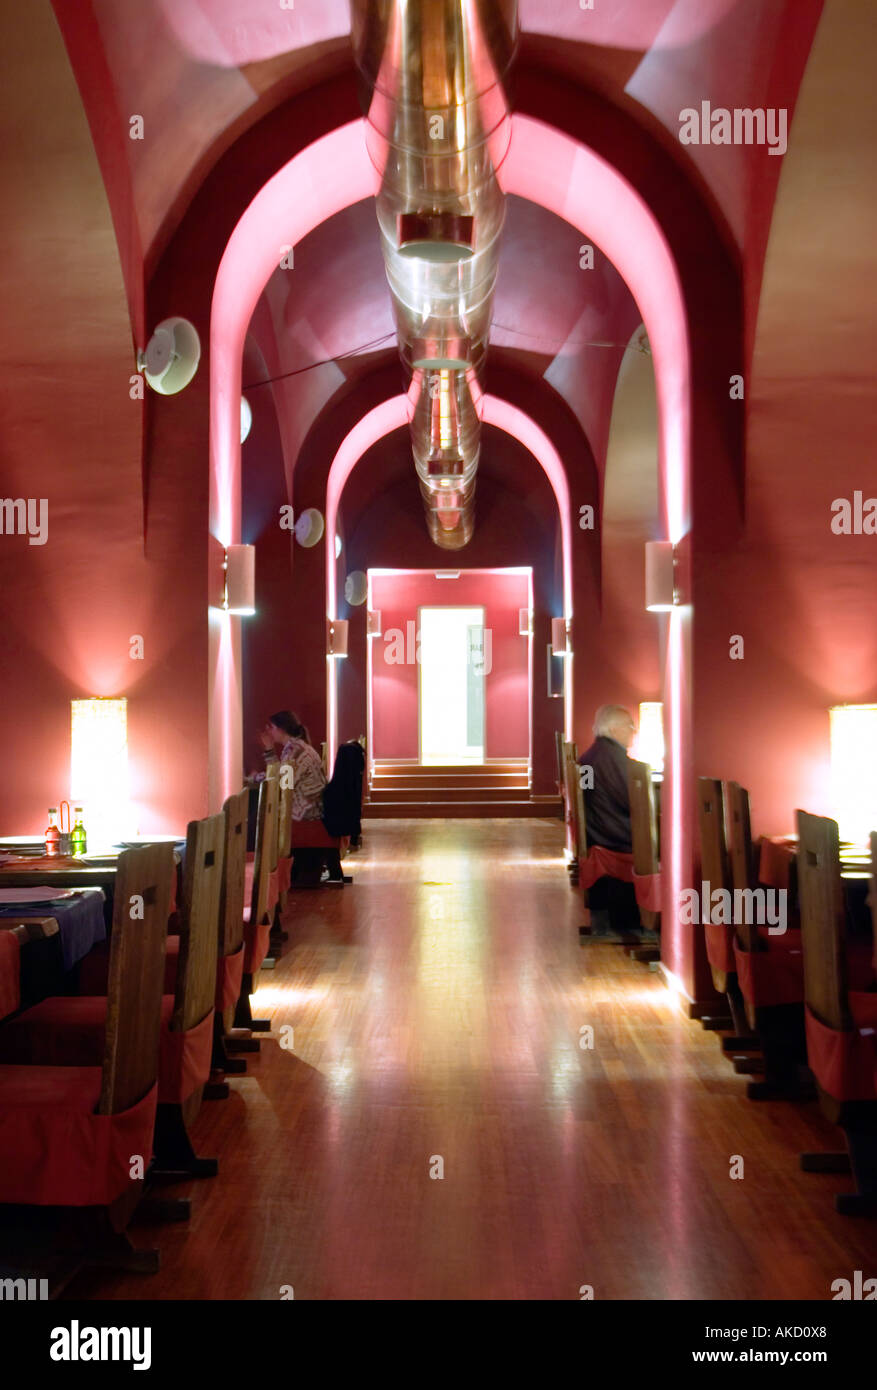 South-East Europe, Croatia, Dubrovnik, interior of illuminated restaurant Stock Photo